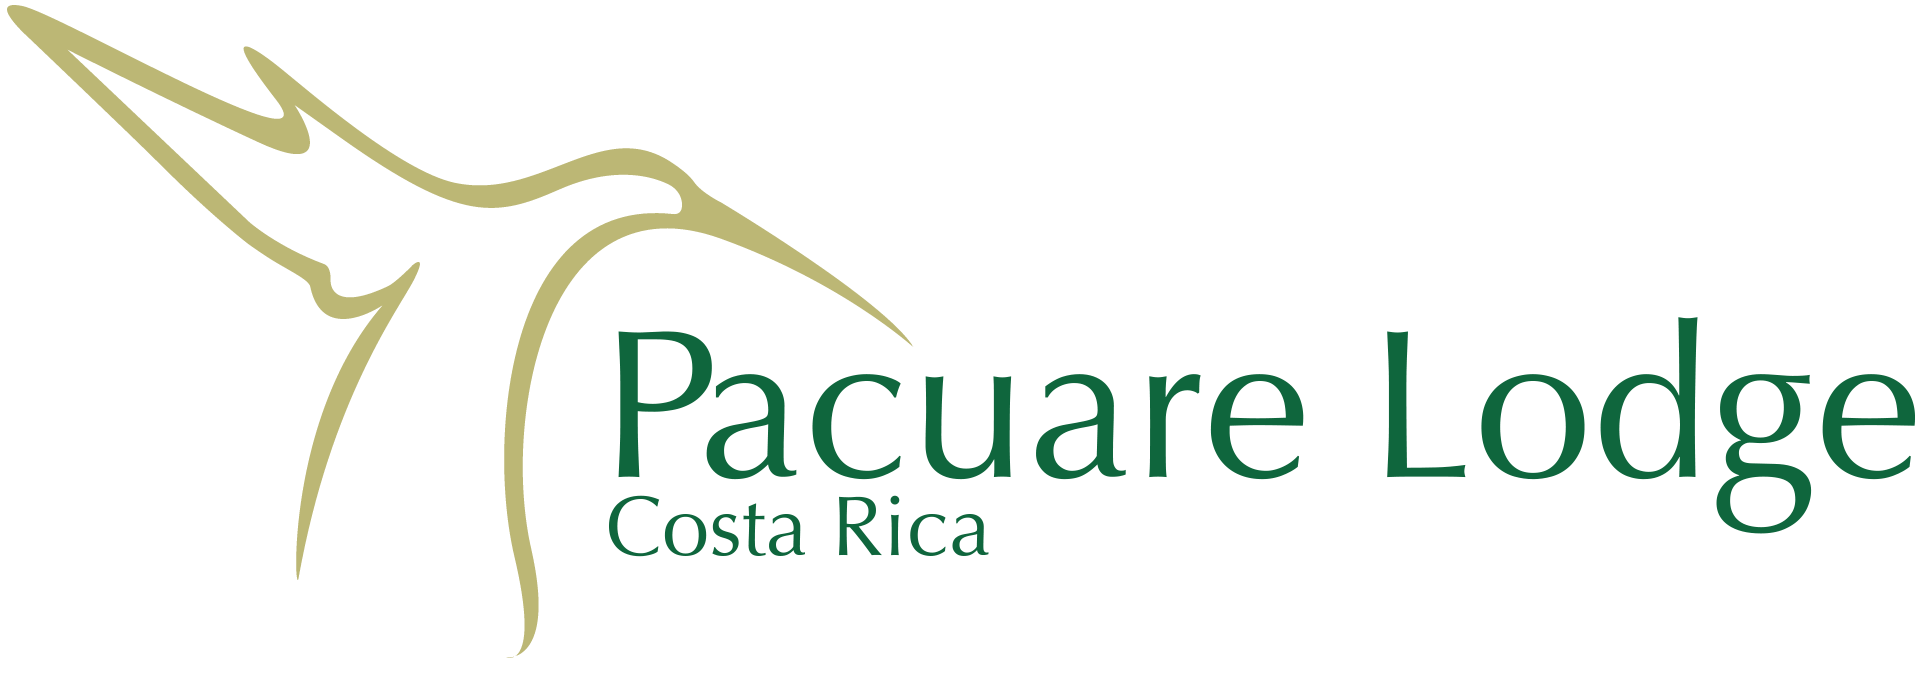 Lodge Logo - The Pacuare Lodge, Costa Rica - The Pacuare Lodge, Costa Rica